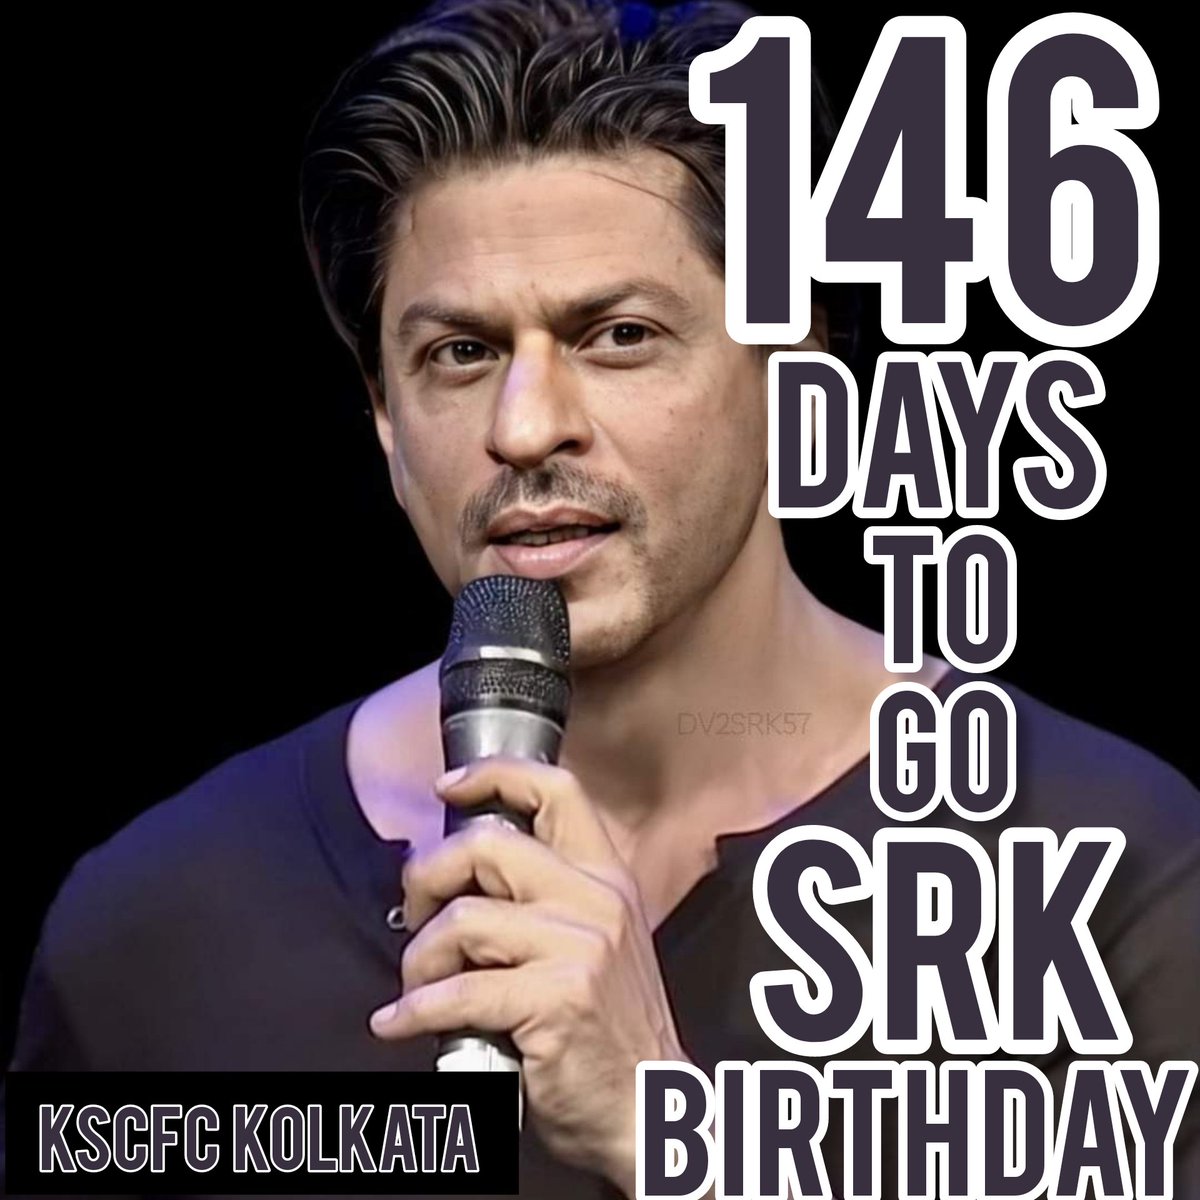 COUNTDOWN IS ON JUST 146 DAYS TO GO A BIG DAY FOR ALL SRKIANS SRK BUS SRK @iamsrk @kolkata_srk @KarunaBadwal
@RedChilliesEnt @pooja_dadlani @khyatimadaan @BilalS158 #AskSRK #ShahRukhKhan𓀠 #kingkhan #Baadshahkhan #SRK #realmeXSRK #myntra